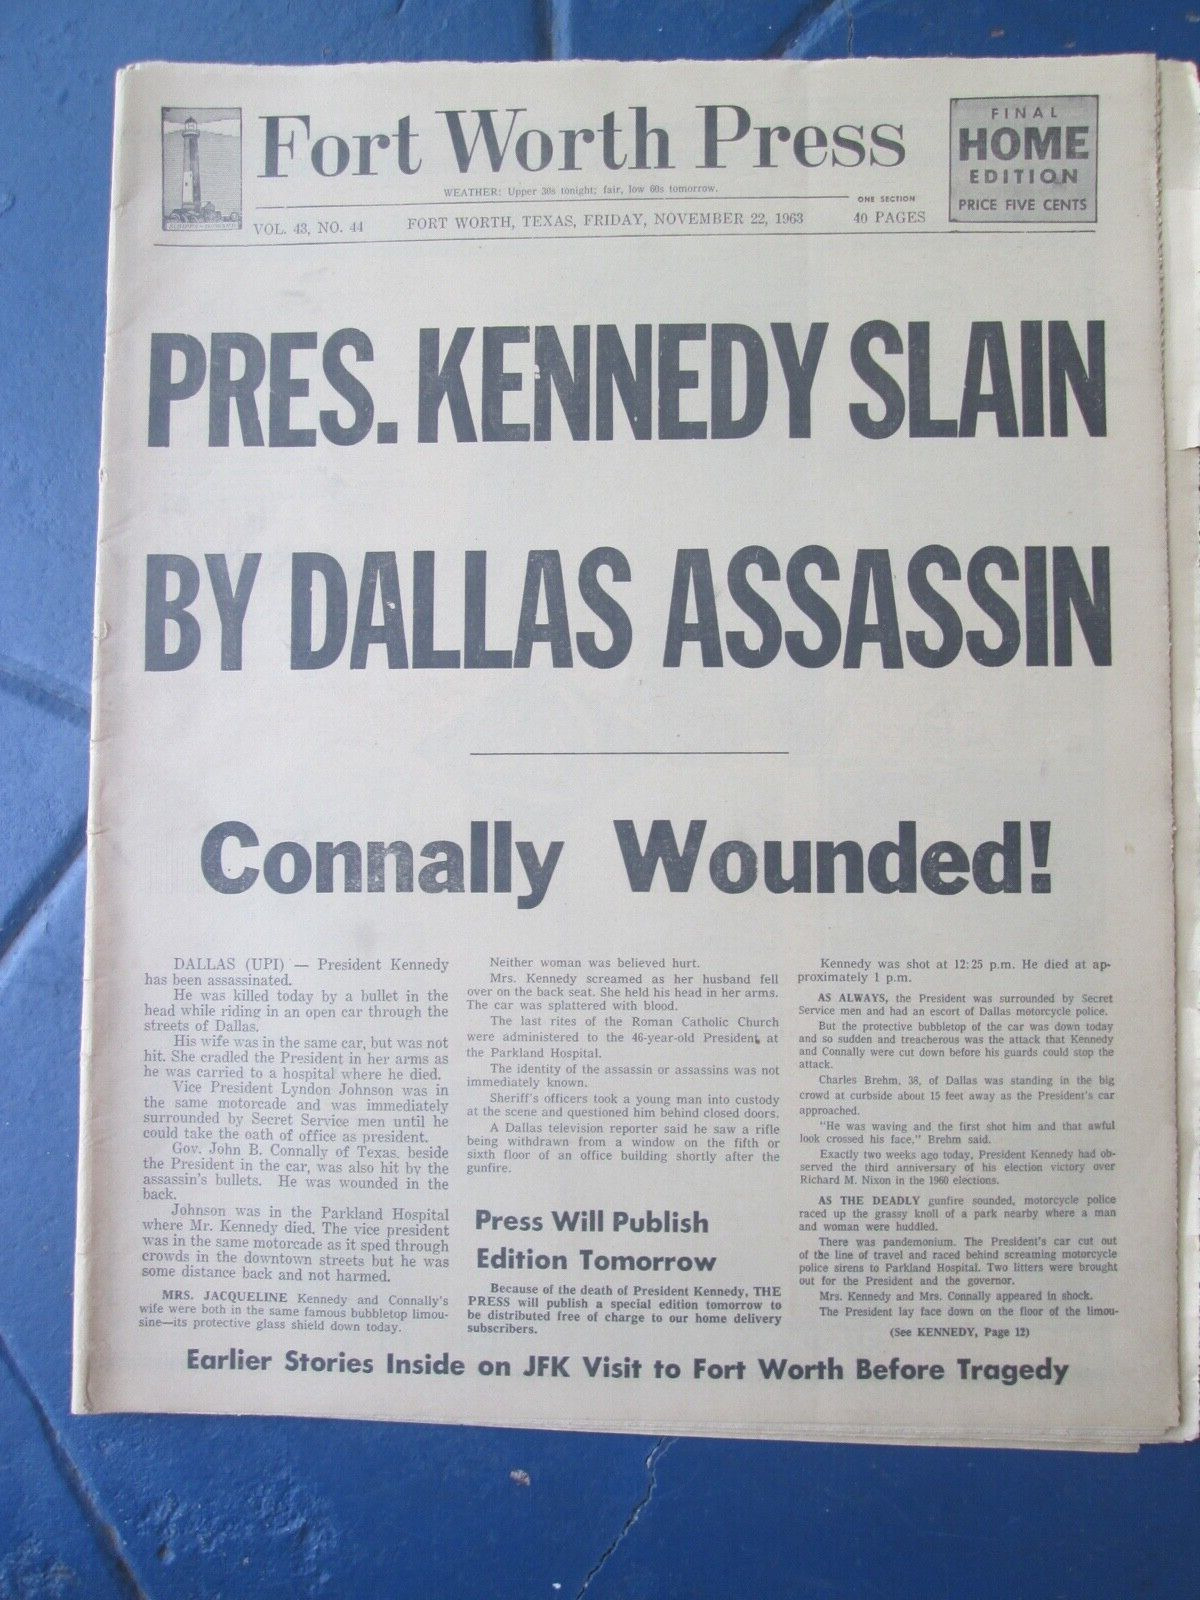 JFK Assassination  November 22 1963  Fort Worth Press  FINAL EDITION